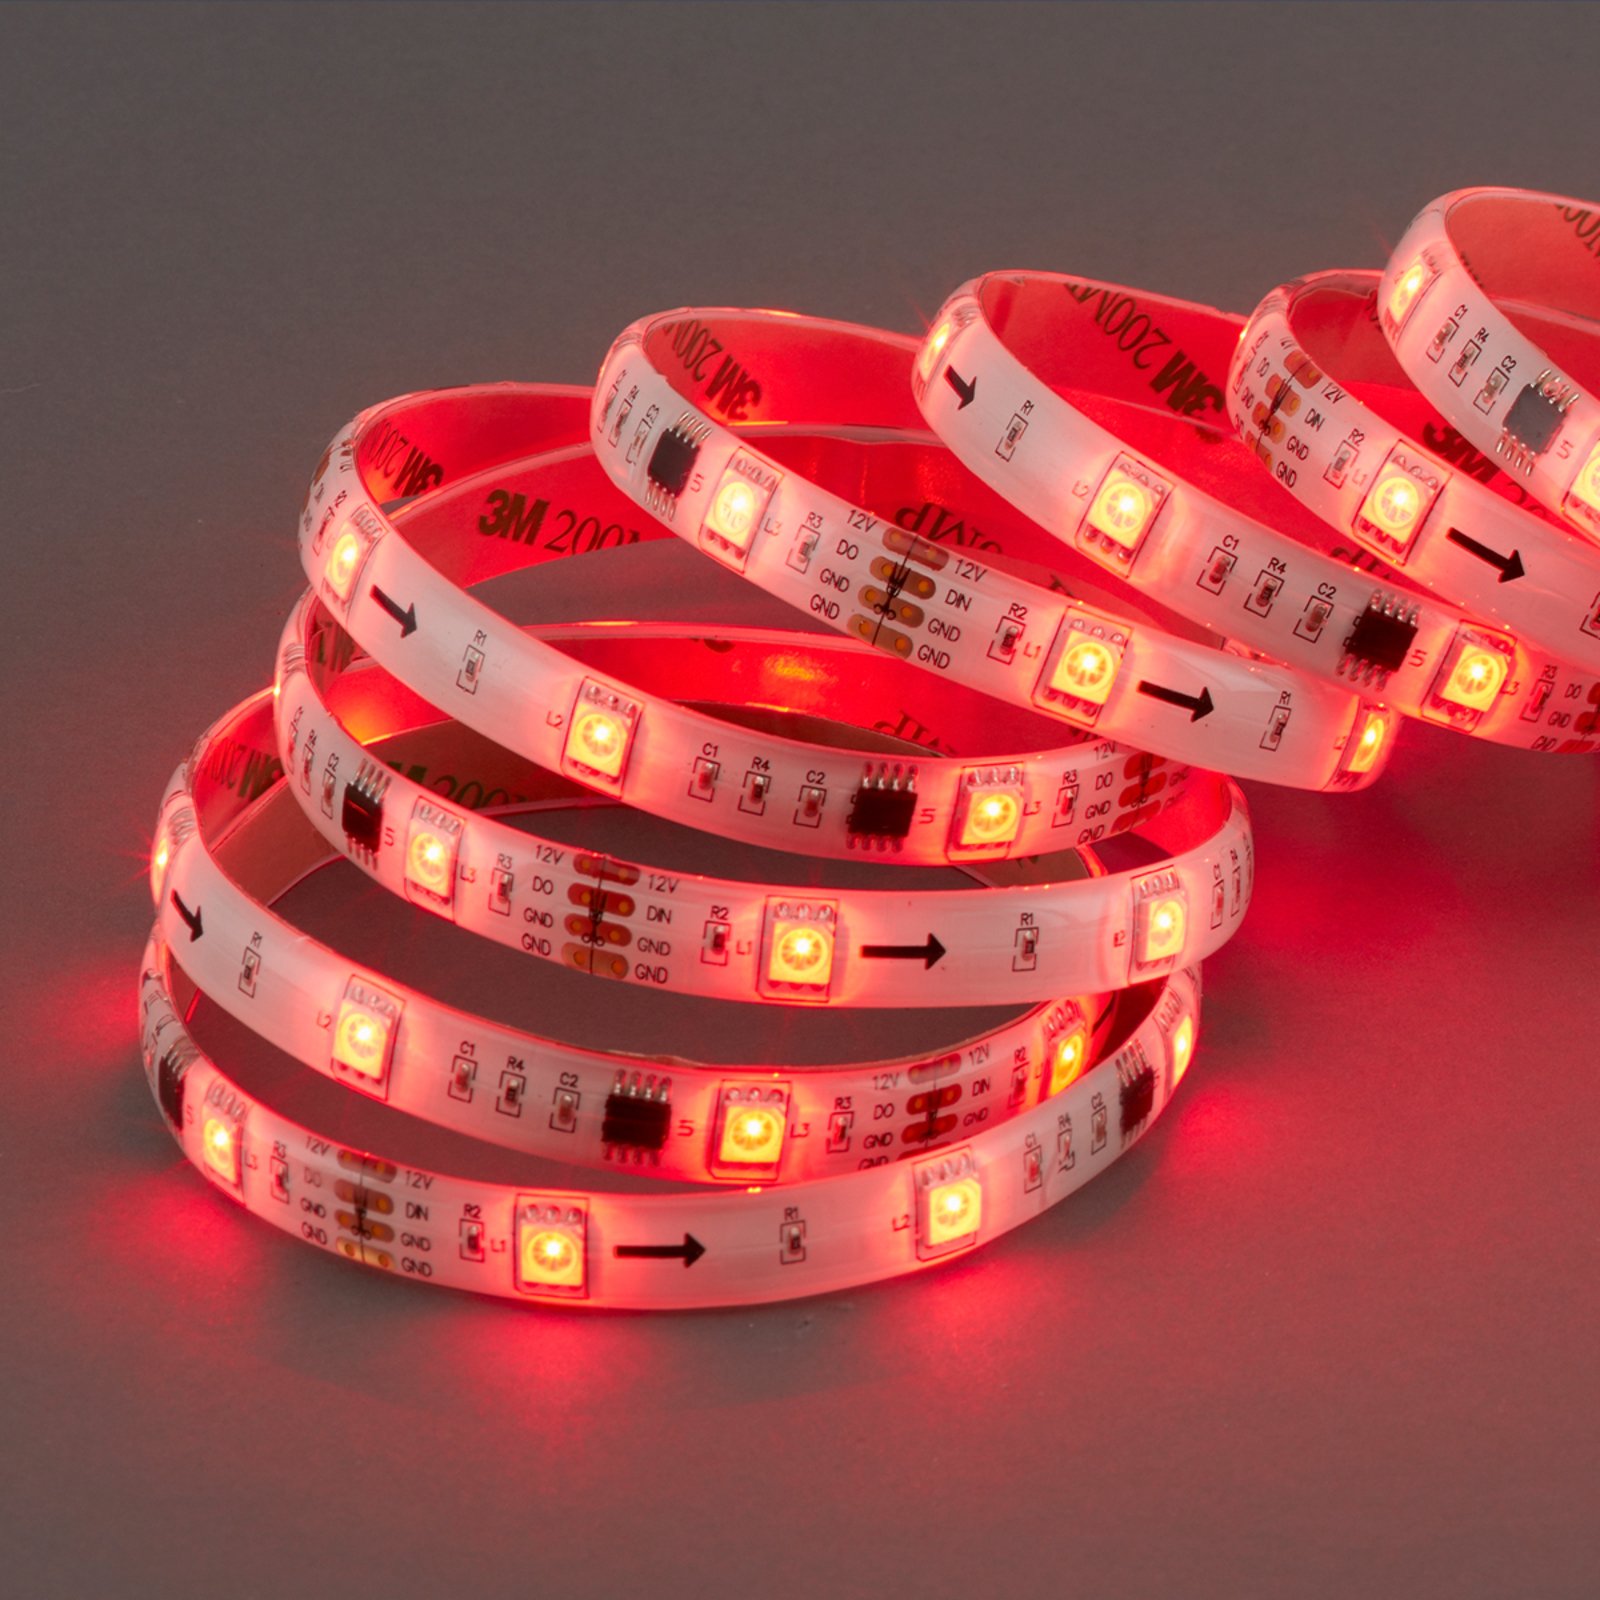 164 svetelných funkcií – 500 cm RGB-LED pásik Mo